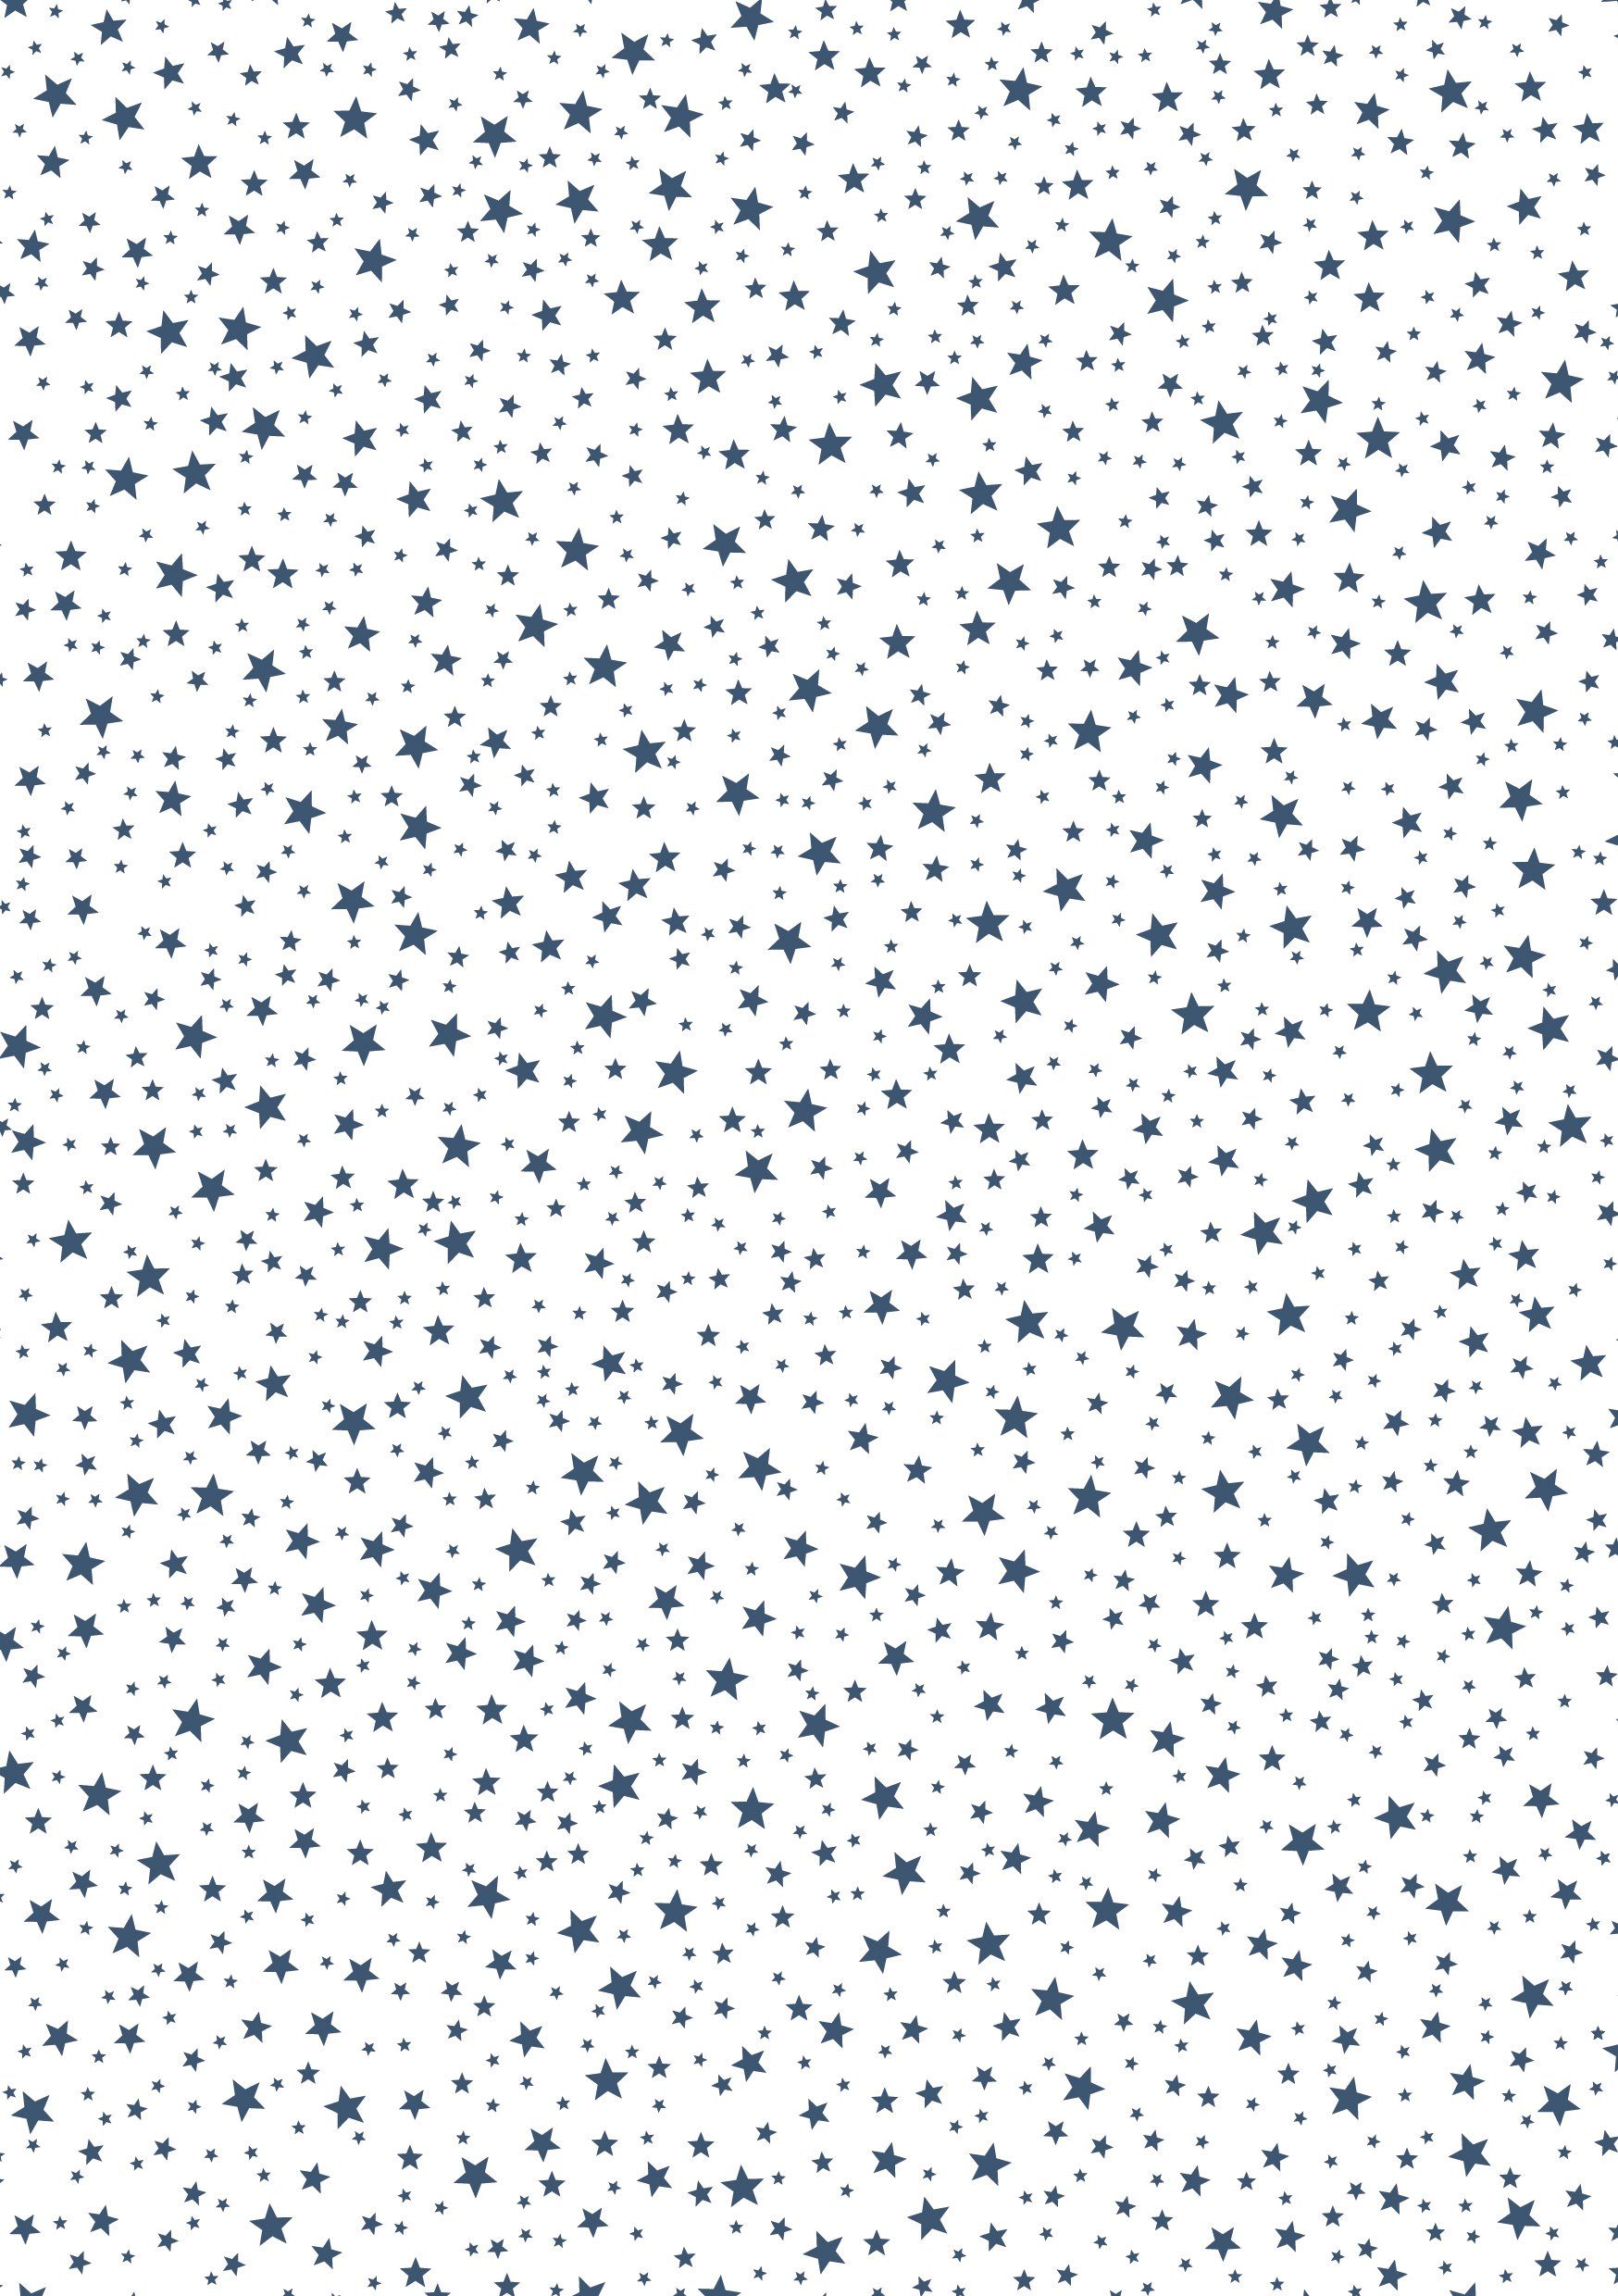 MarpaJansen Motivpapier Mini-Sterne, 70 cm x 50 cm Blau